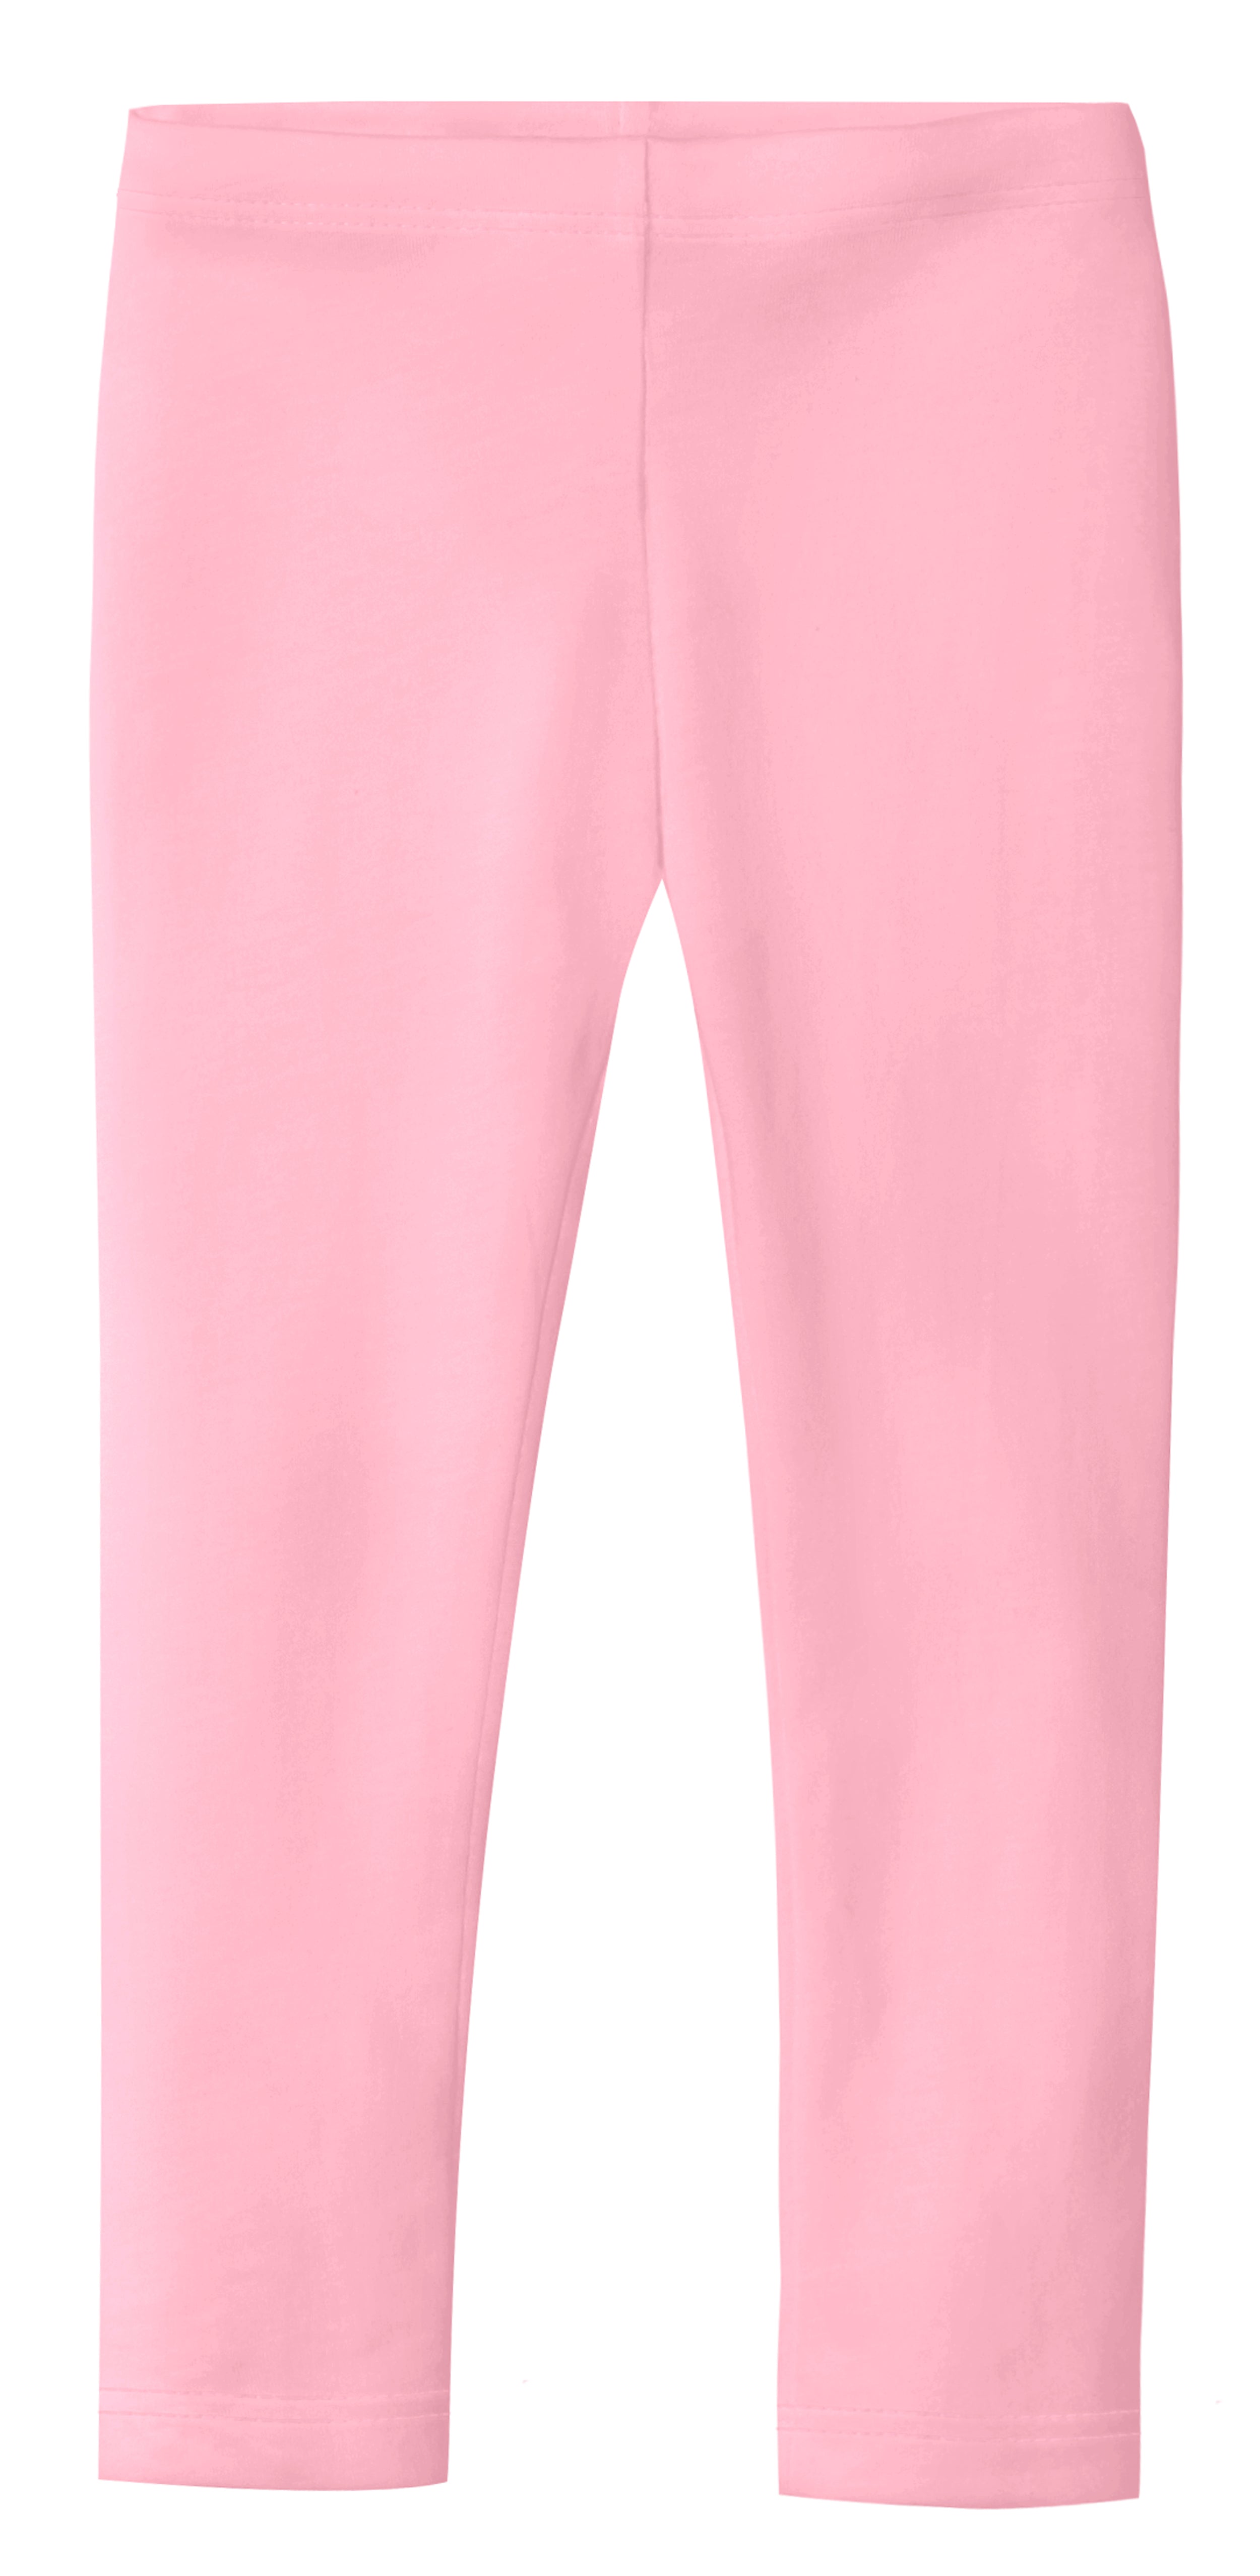 Girls Soft Organic Cotton Leggings  Bright Light Pink - City Threads USA